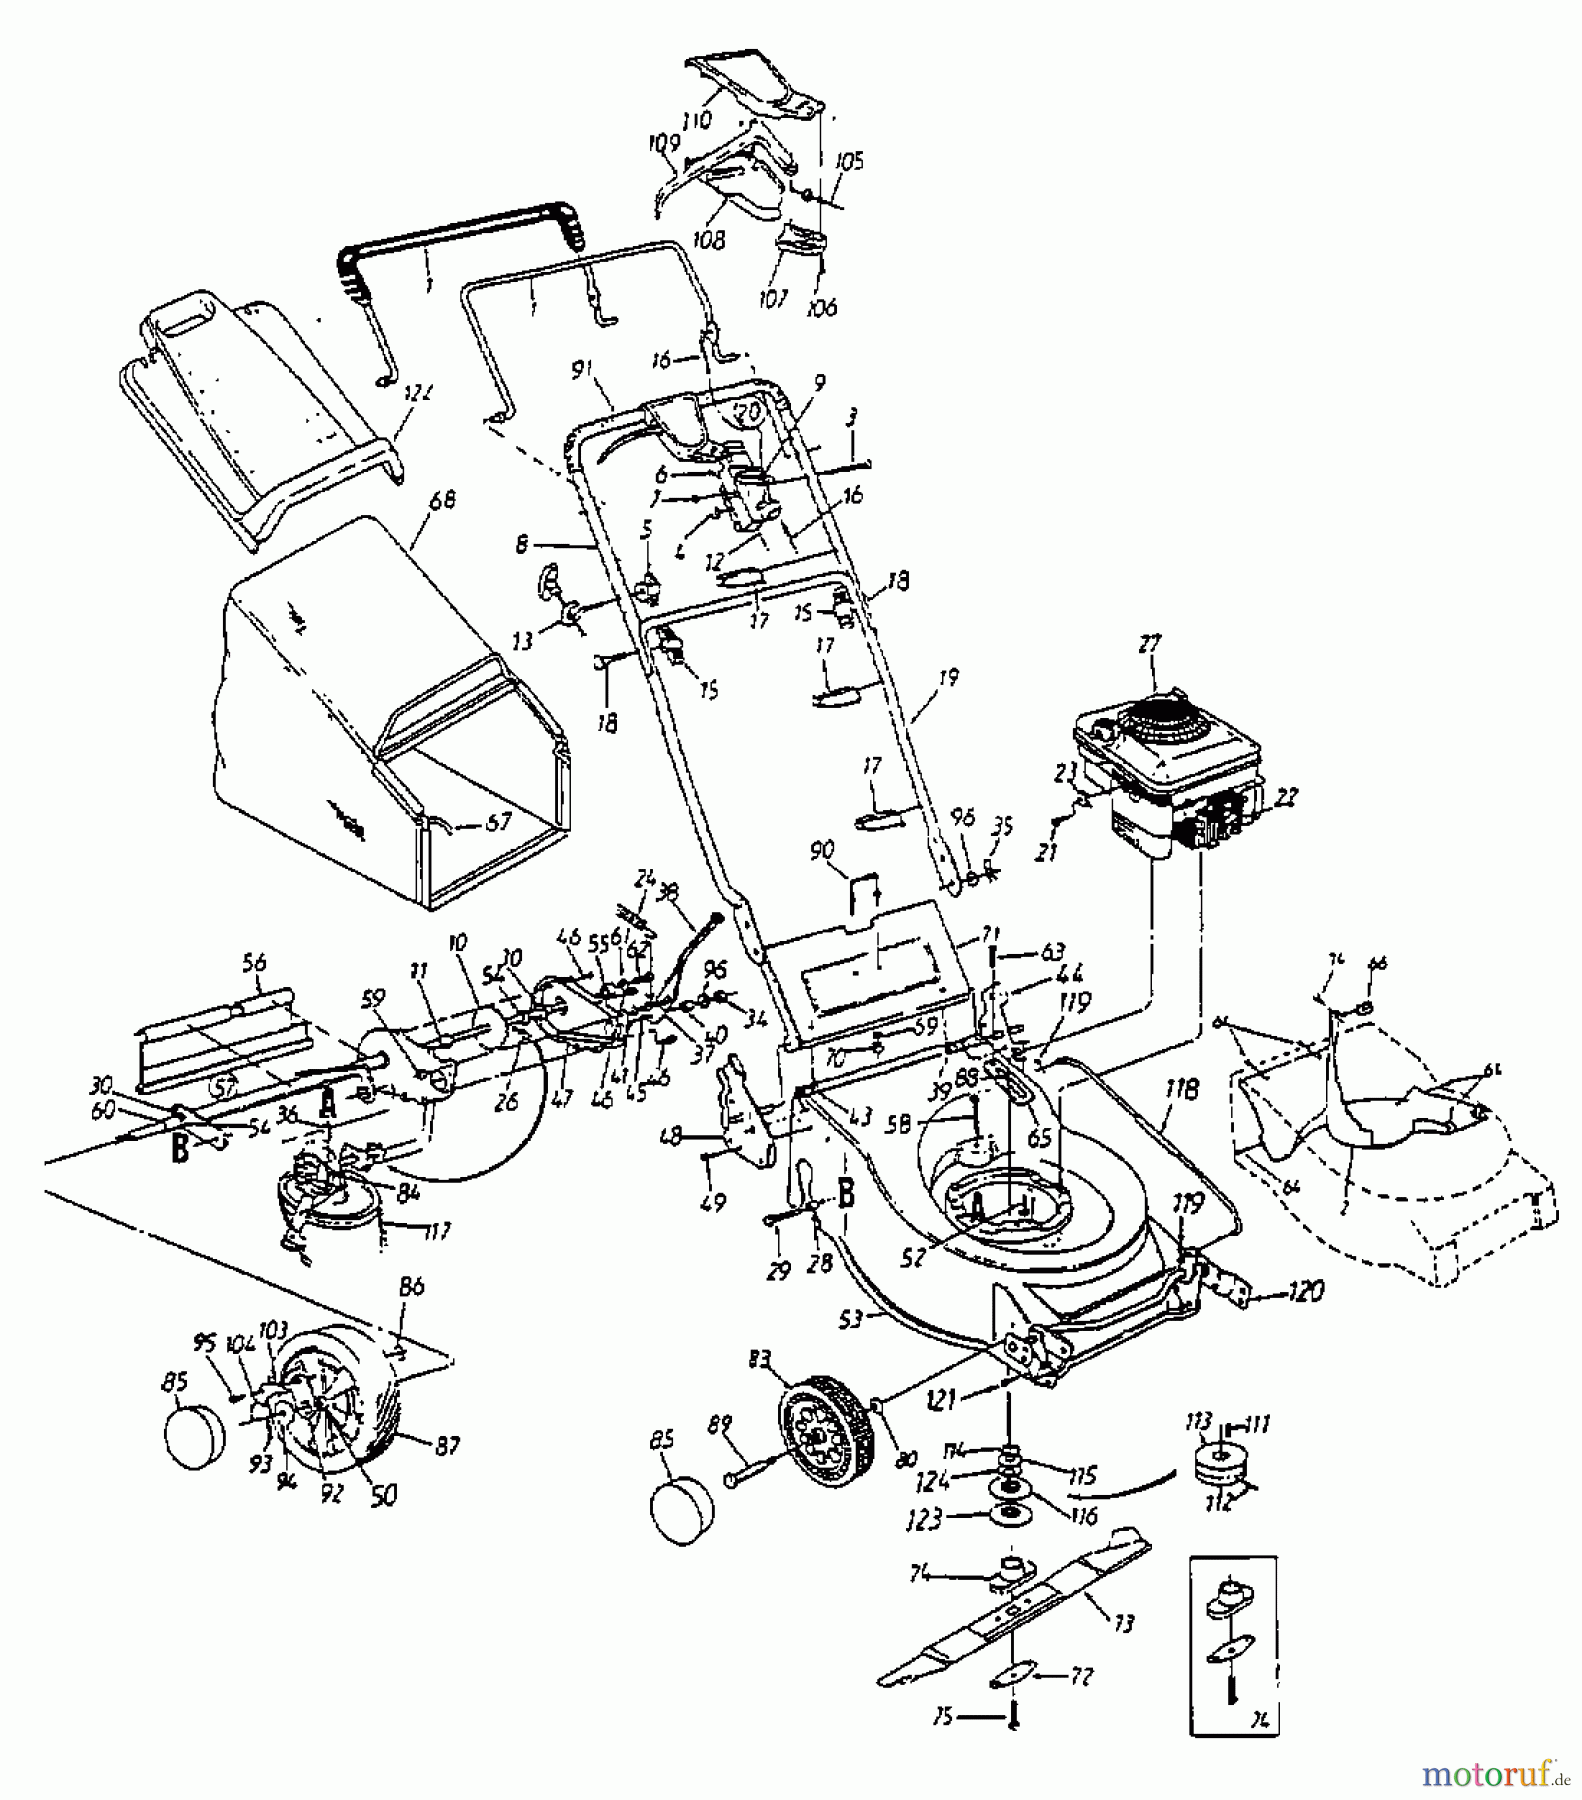  Lawnflite Petrol mower self propelled 384 SP 12A-698C611  (1998) Basic machine